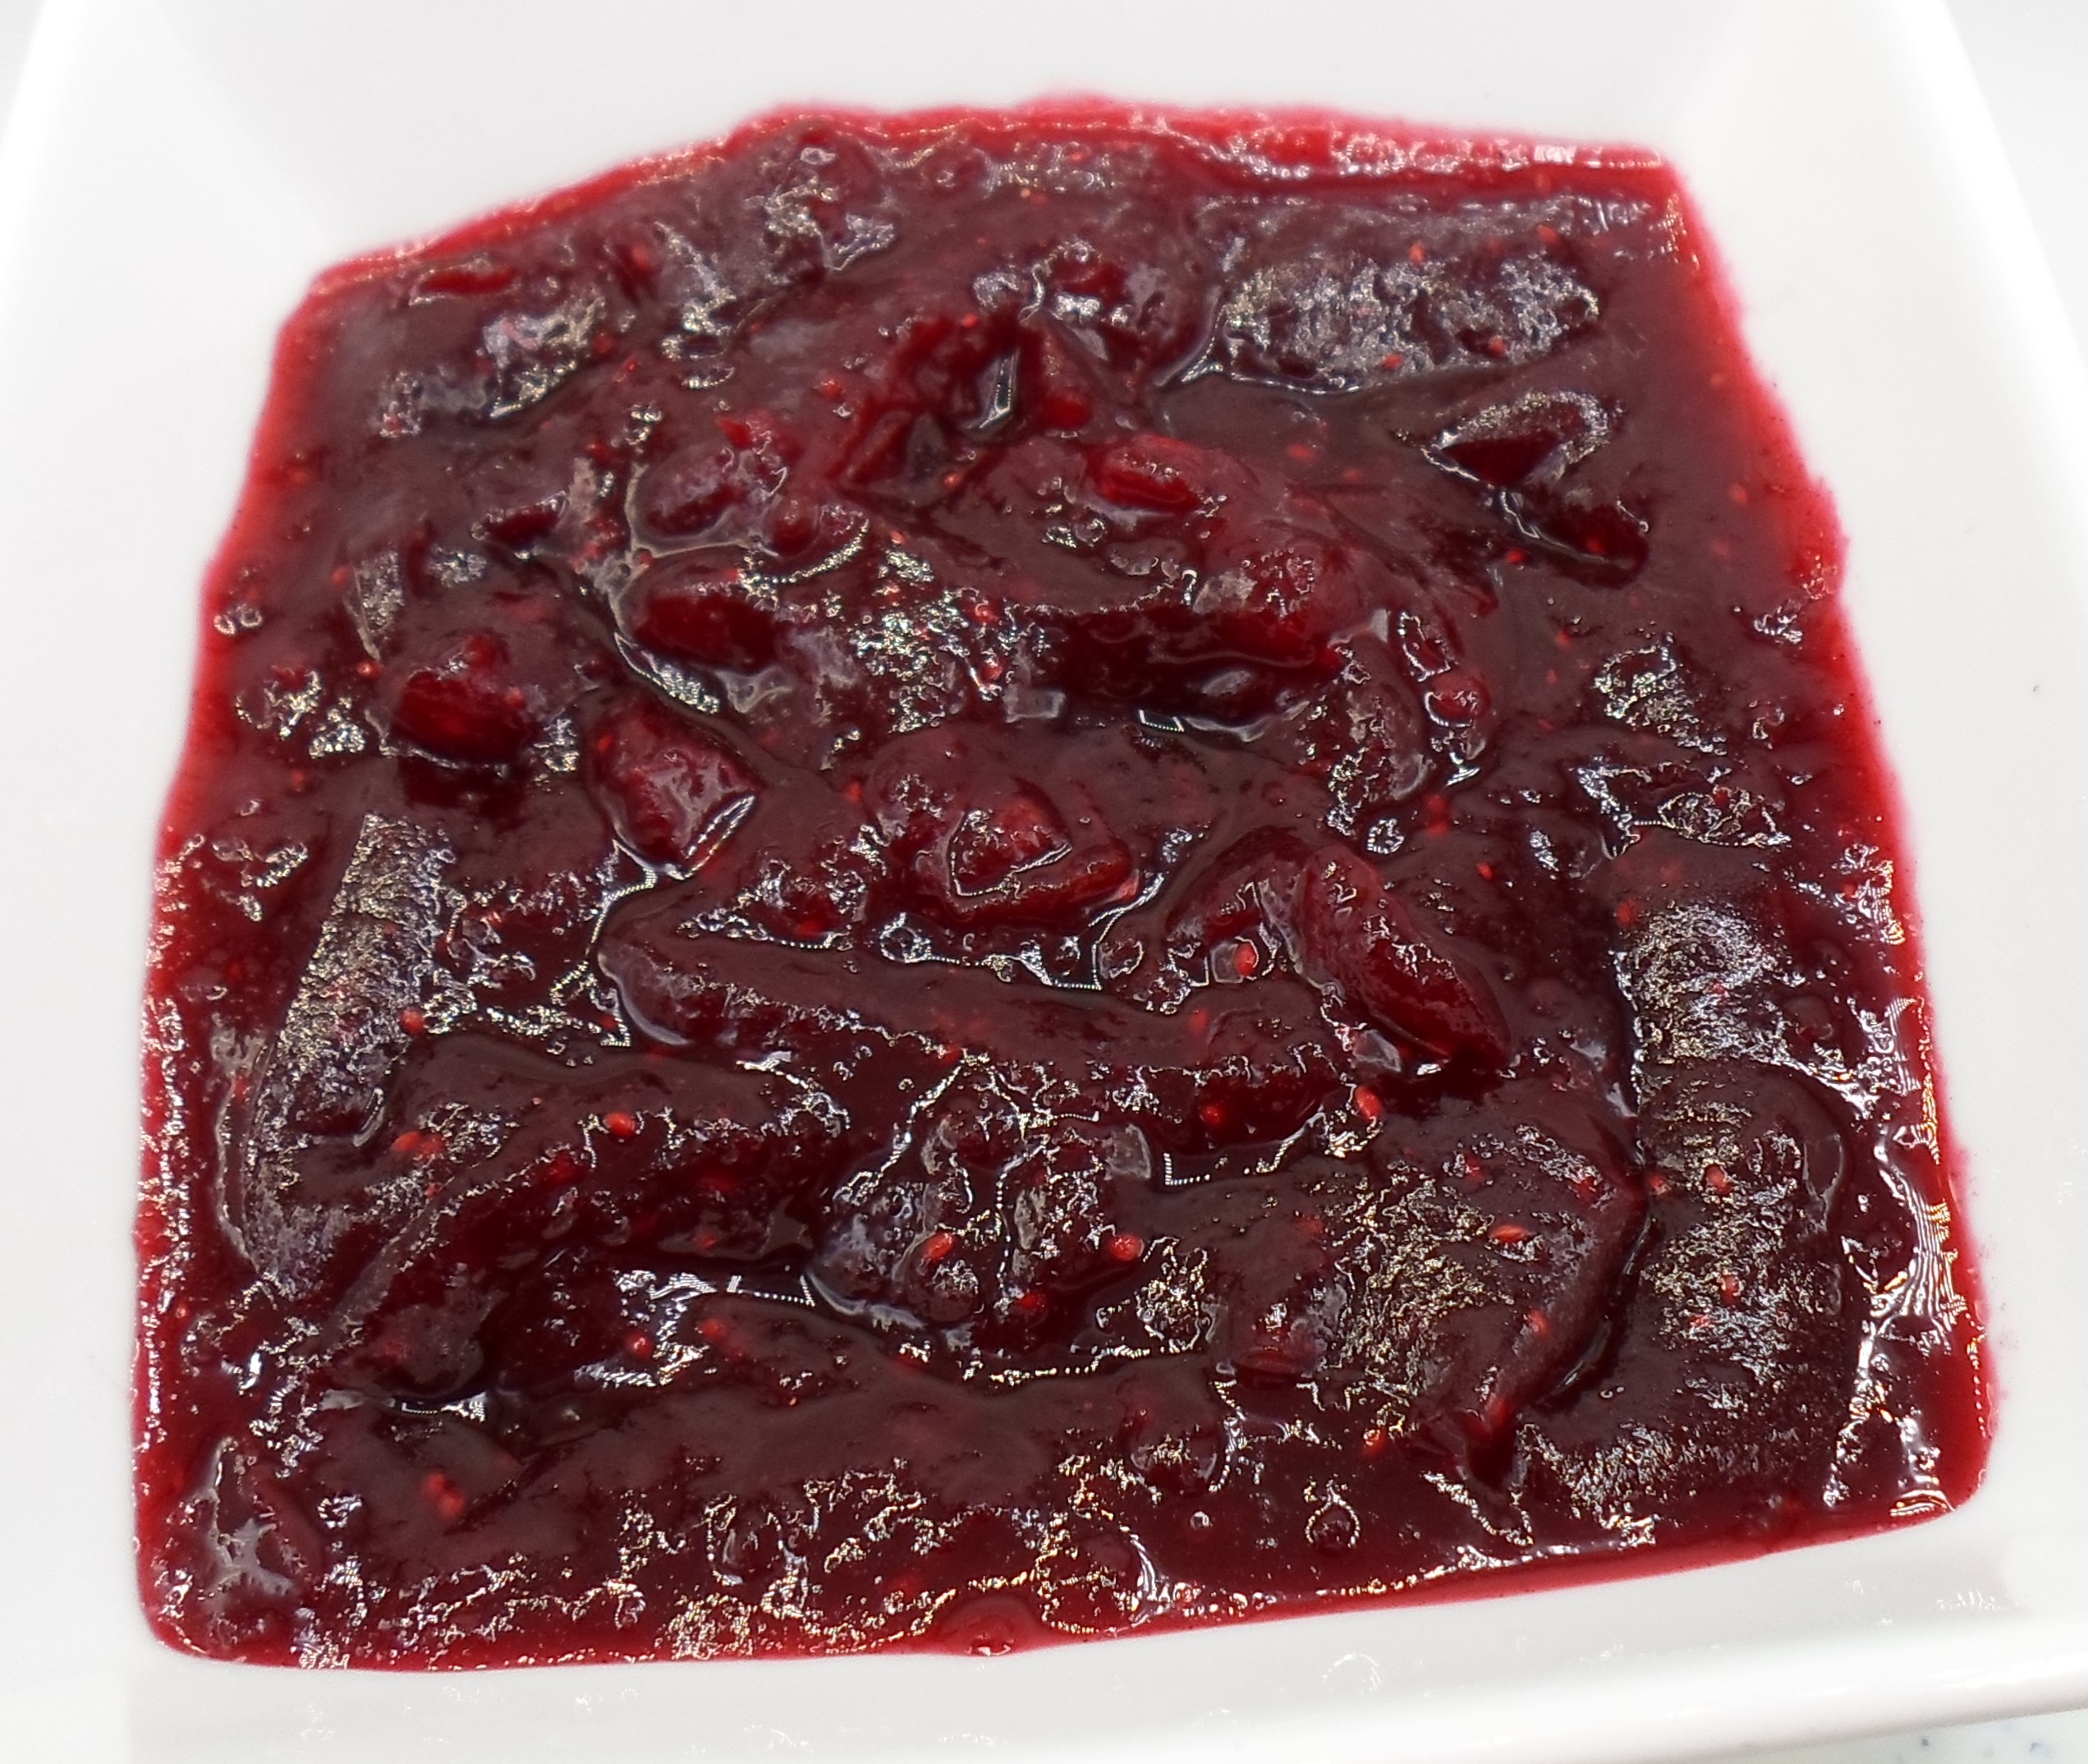 Savory Cranberry Sauce Recipe